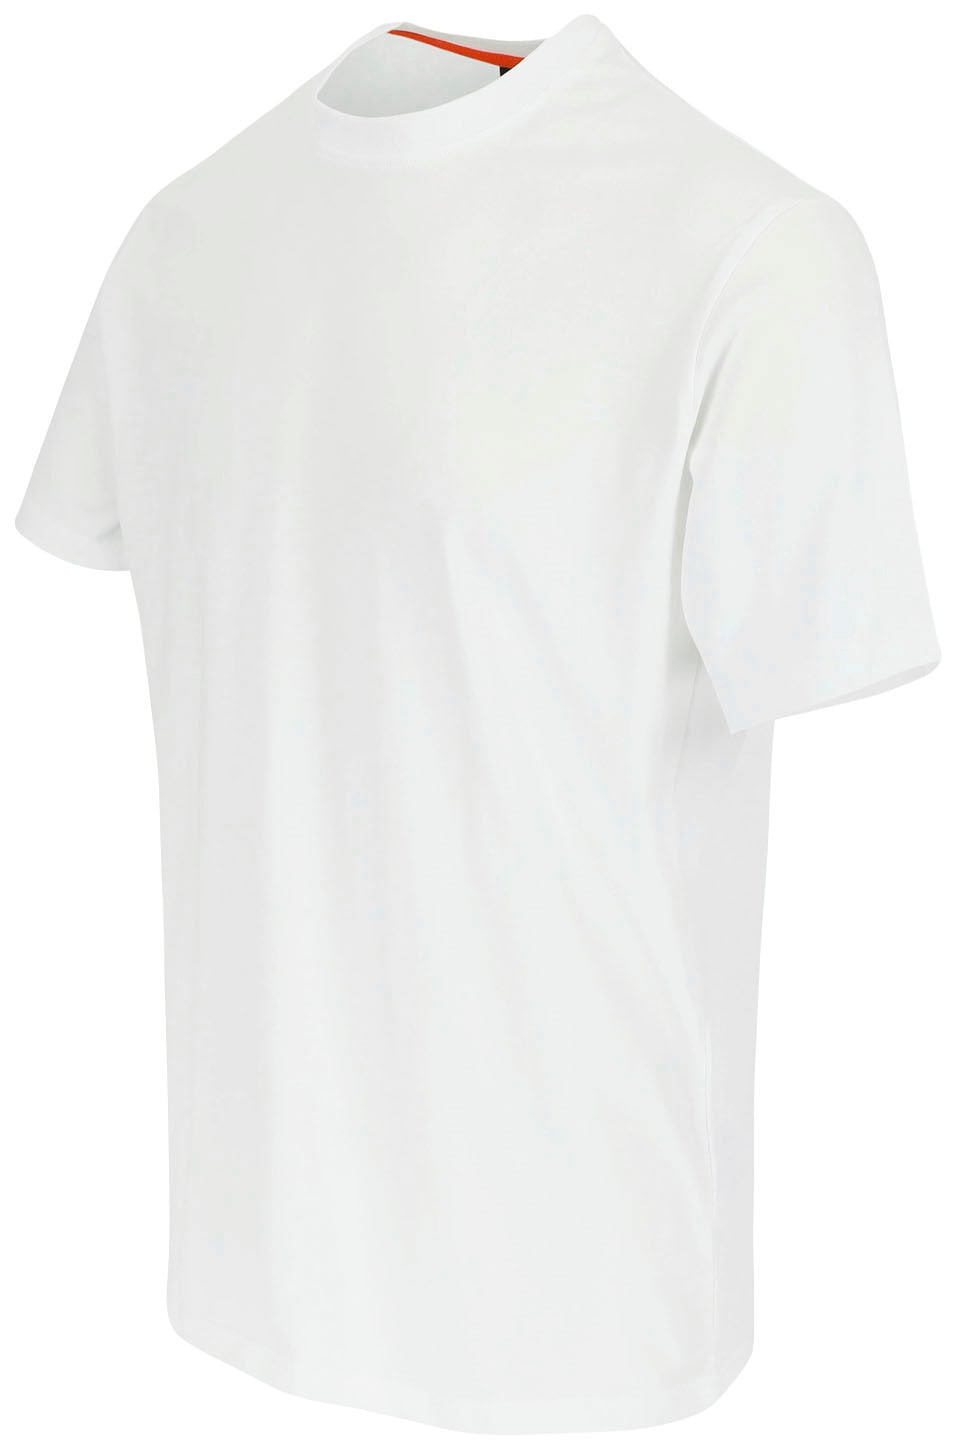 OTTO 3 Rippstrick-Kragen »Argo Kurzärmlig«, mit Tragegefühl bei Kurze angenehmes T-Shirt online kaufen Herock Ärmel, T-Shirt (Spar-Set, tlg.),